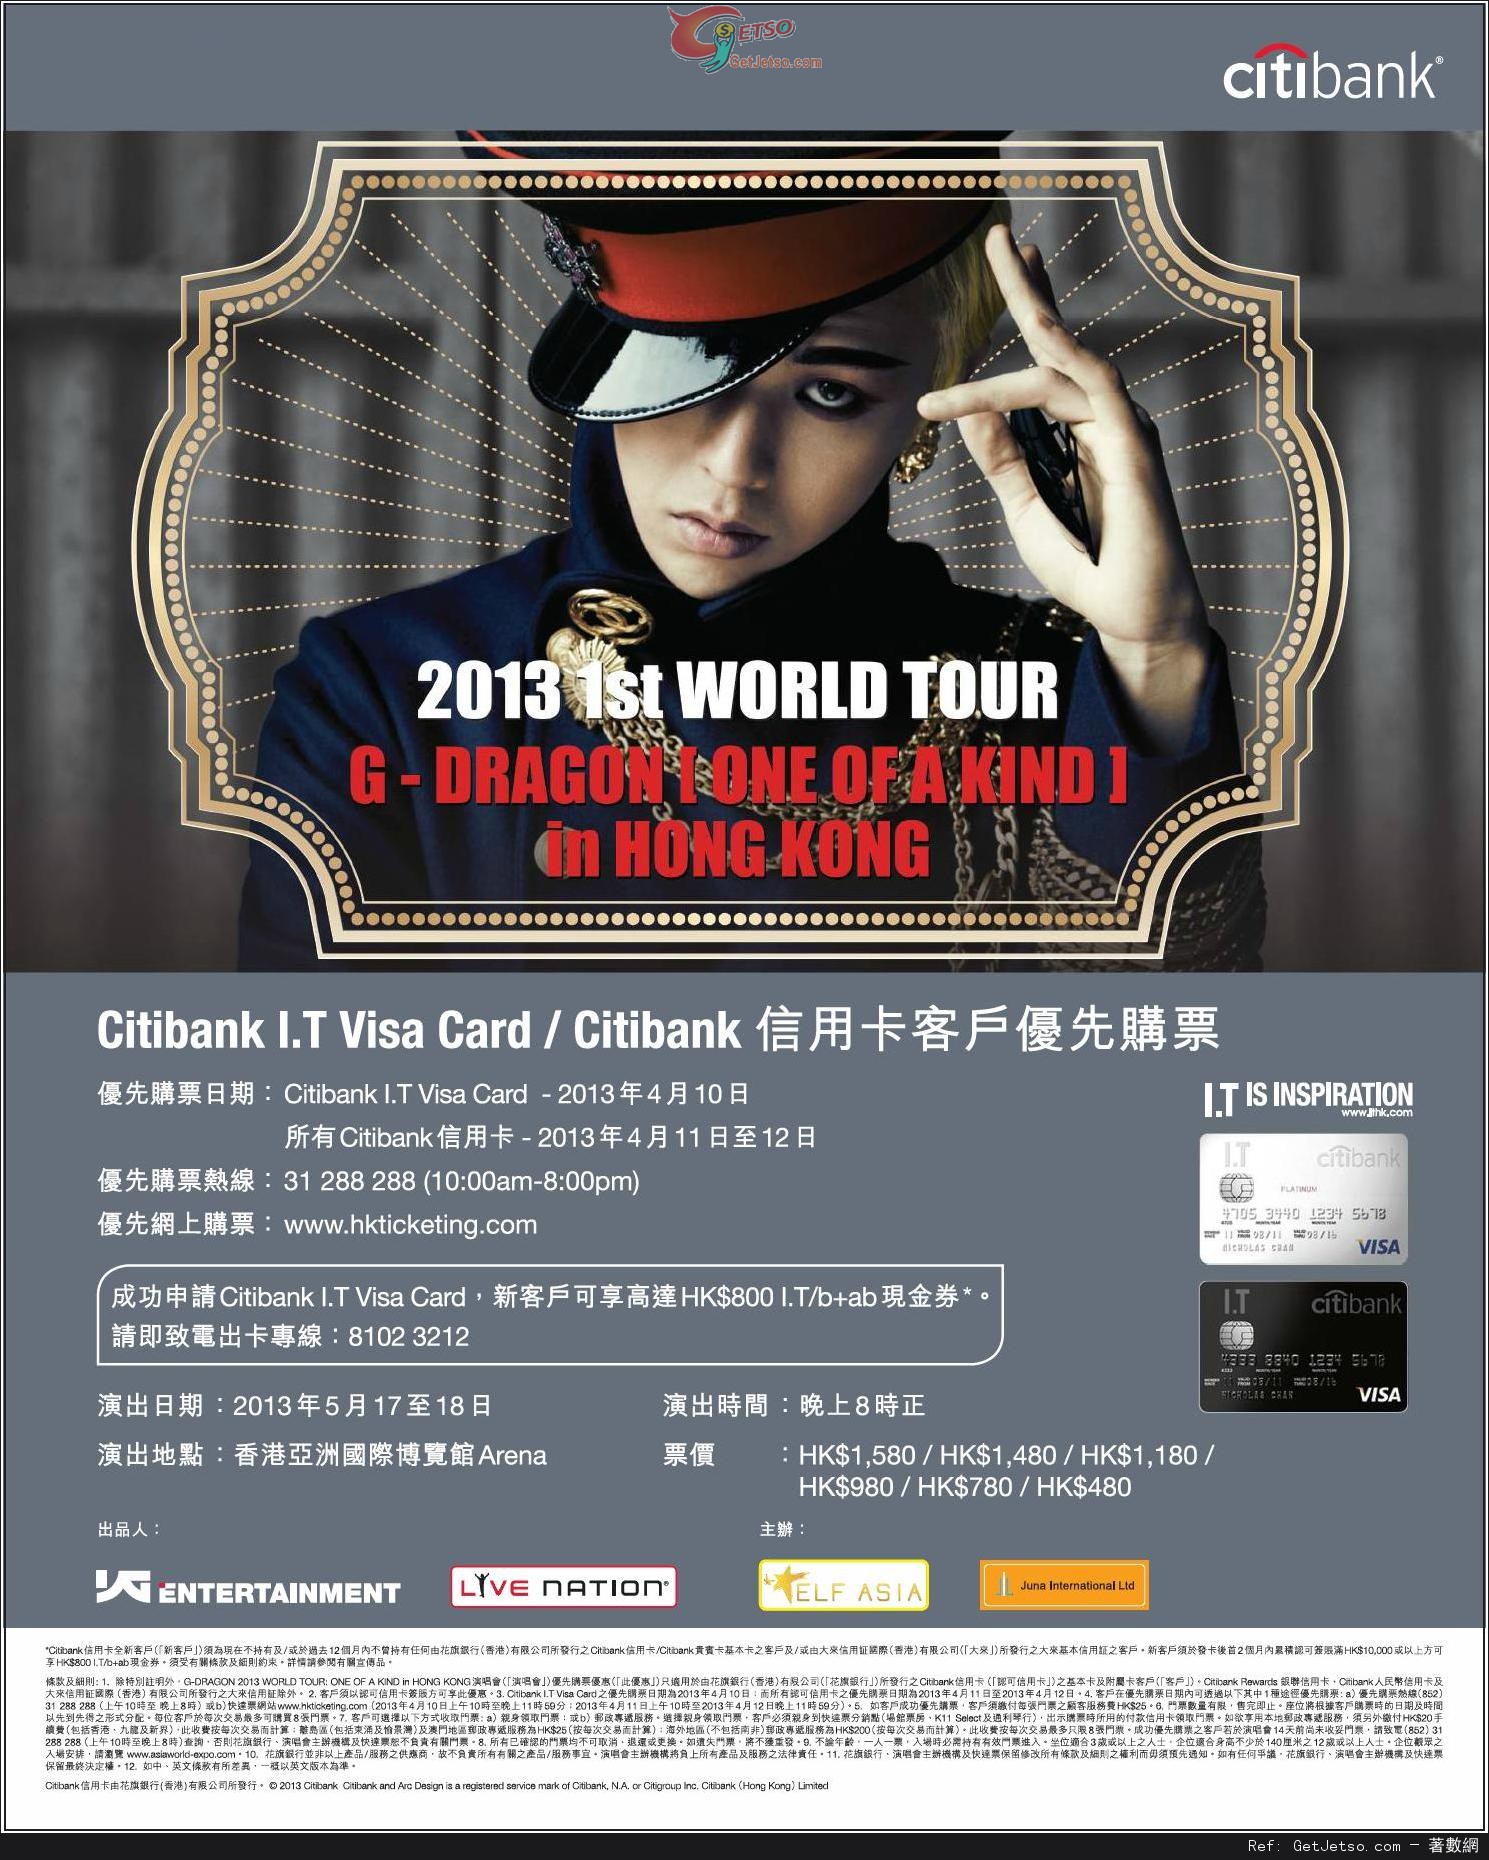 Citibank 信用卡享G-DRAGON 2013 WORLD TOUR 香港演唱會優先購票優惠(至13年4月12日)圖片1